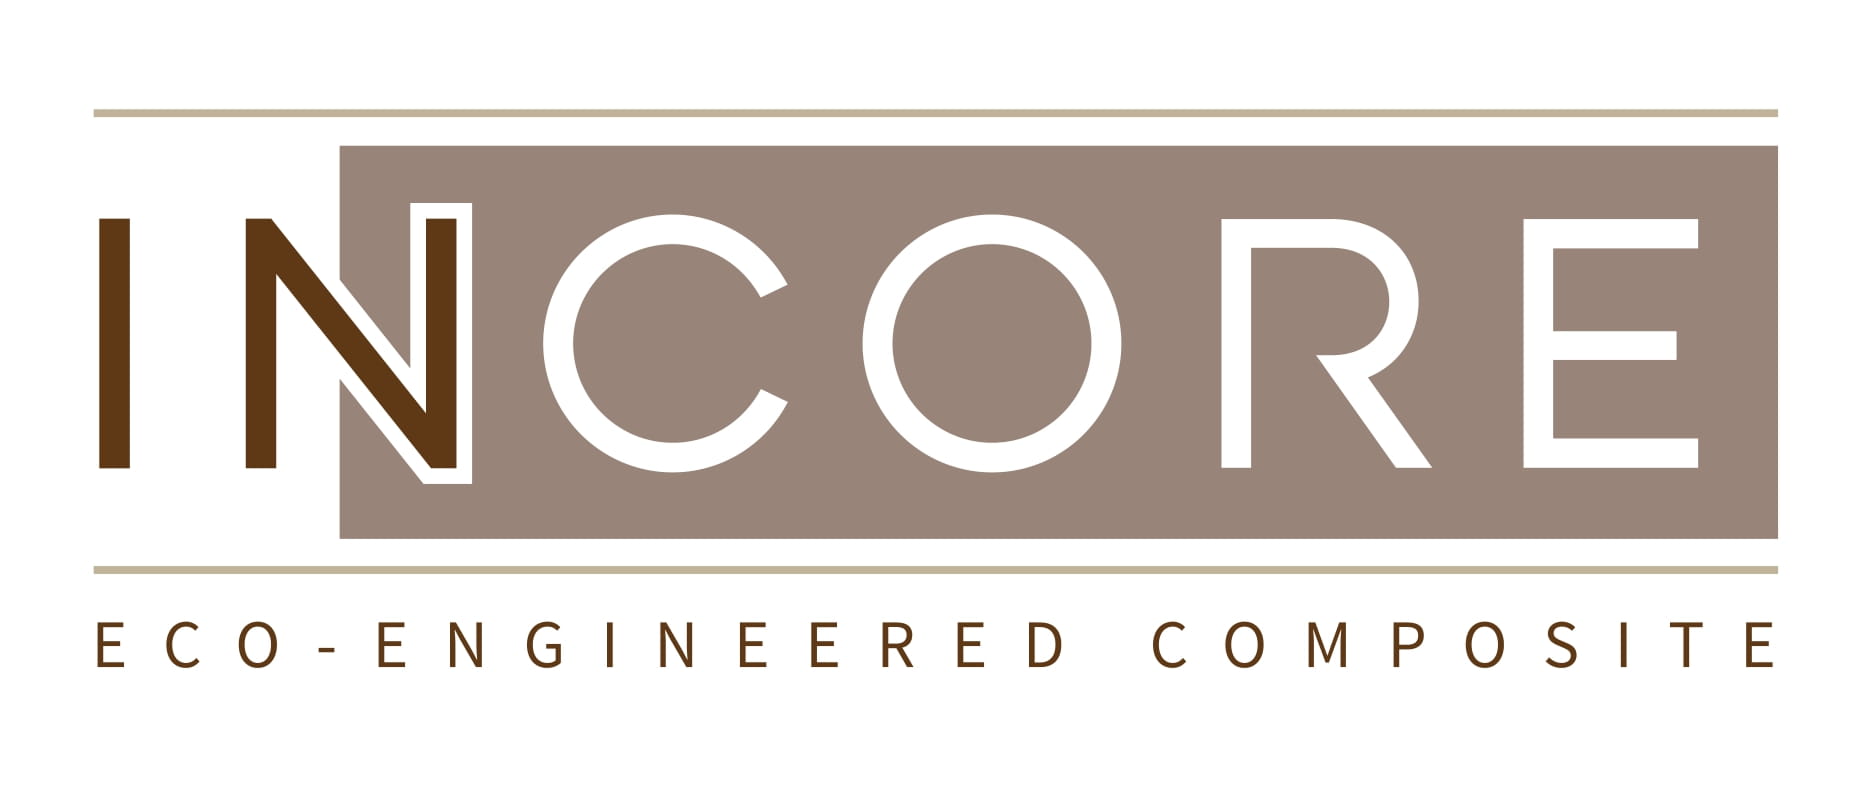 INCORE logo-1.jpg